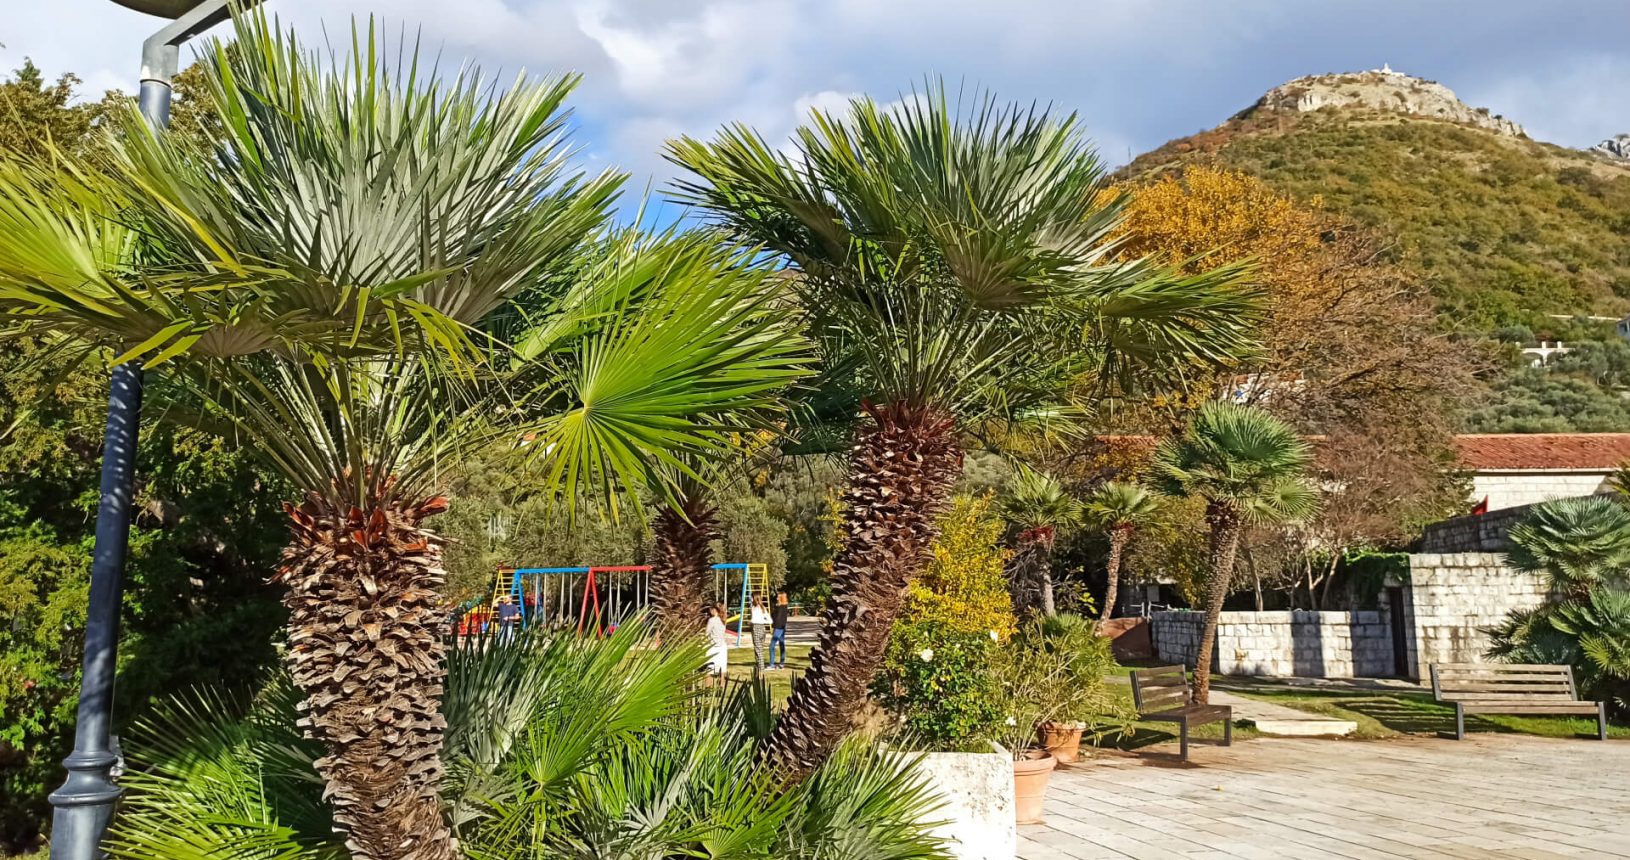 Palms in the park Sveti Stefan